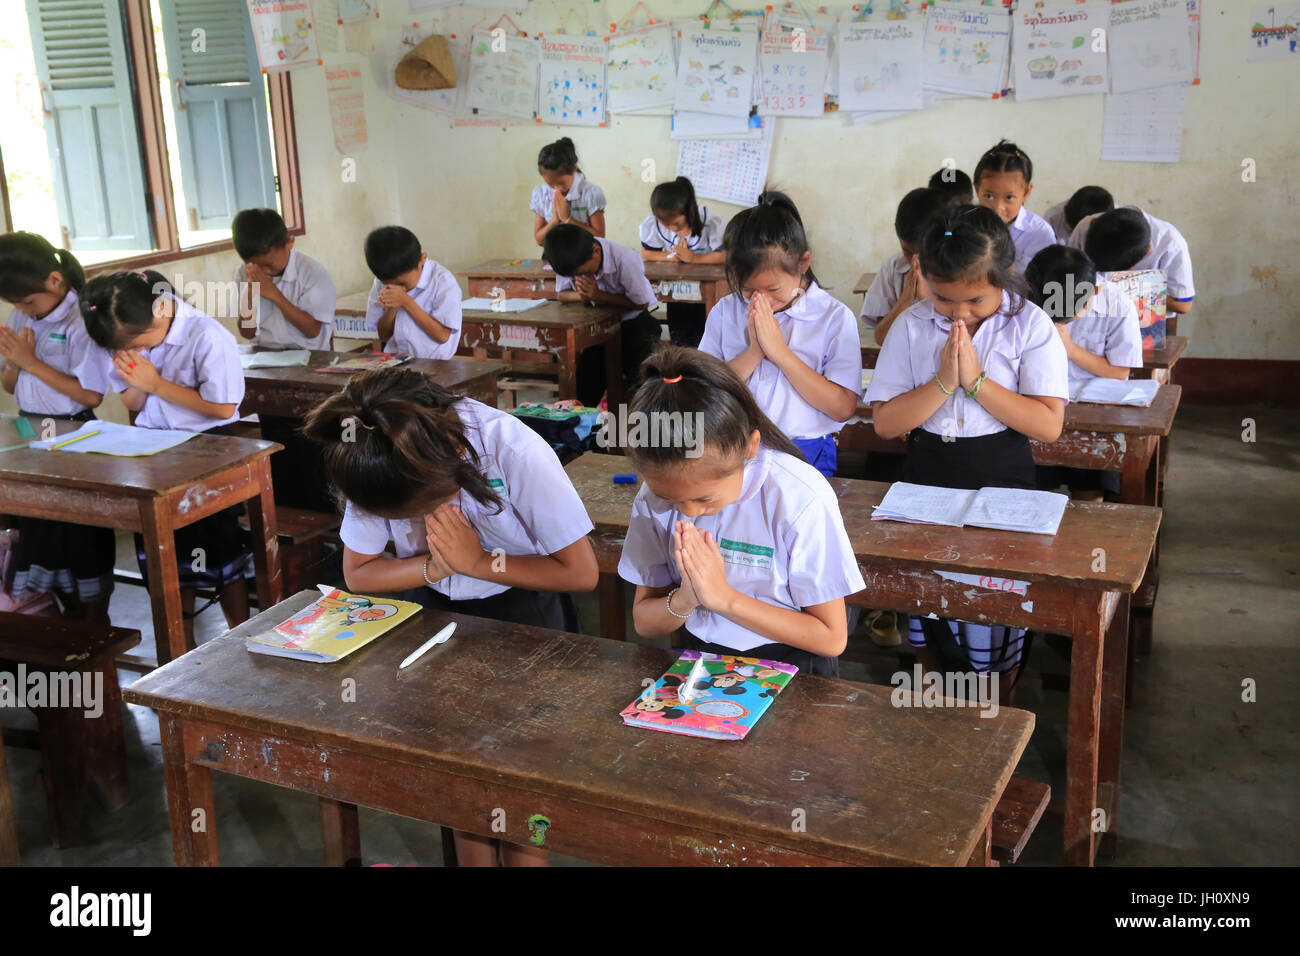 Elementary school. Schoolchildren in classroom. Laos. Stock Photo